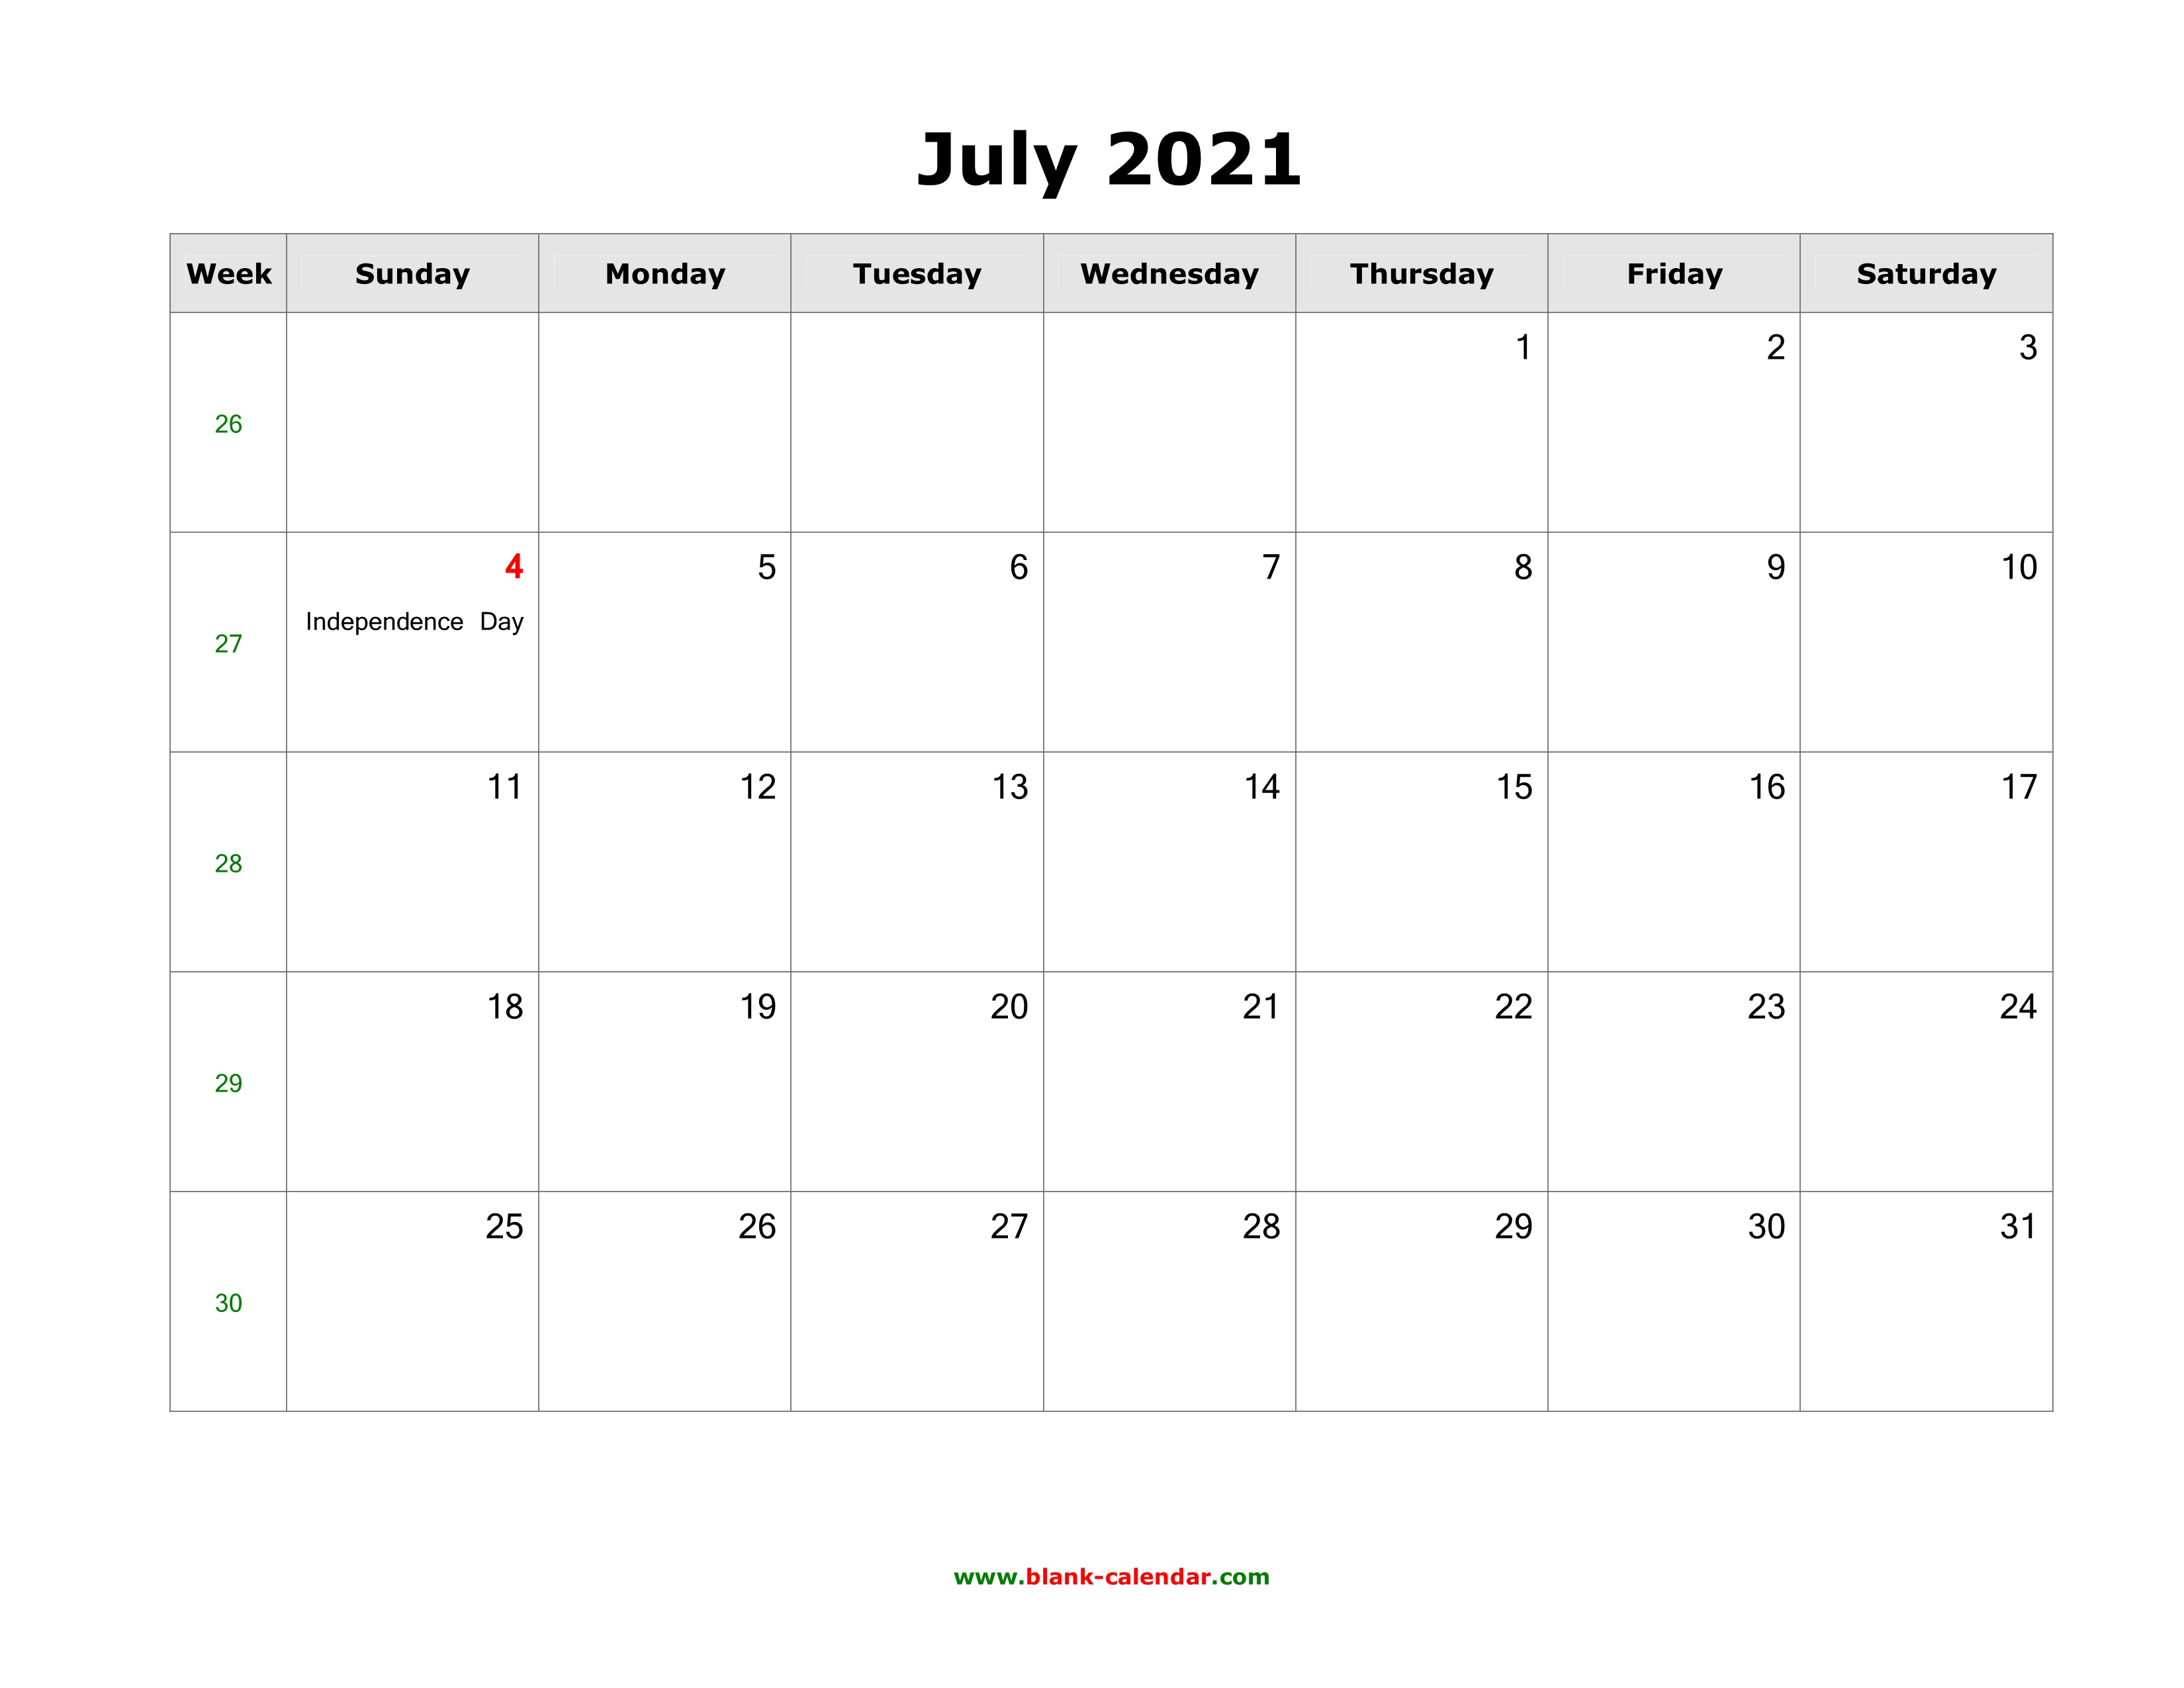 Blank Calendar July 2021 July 2021 Blank Calendar | Free Download Calendar Templates